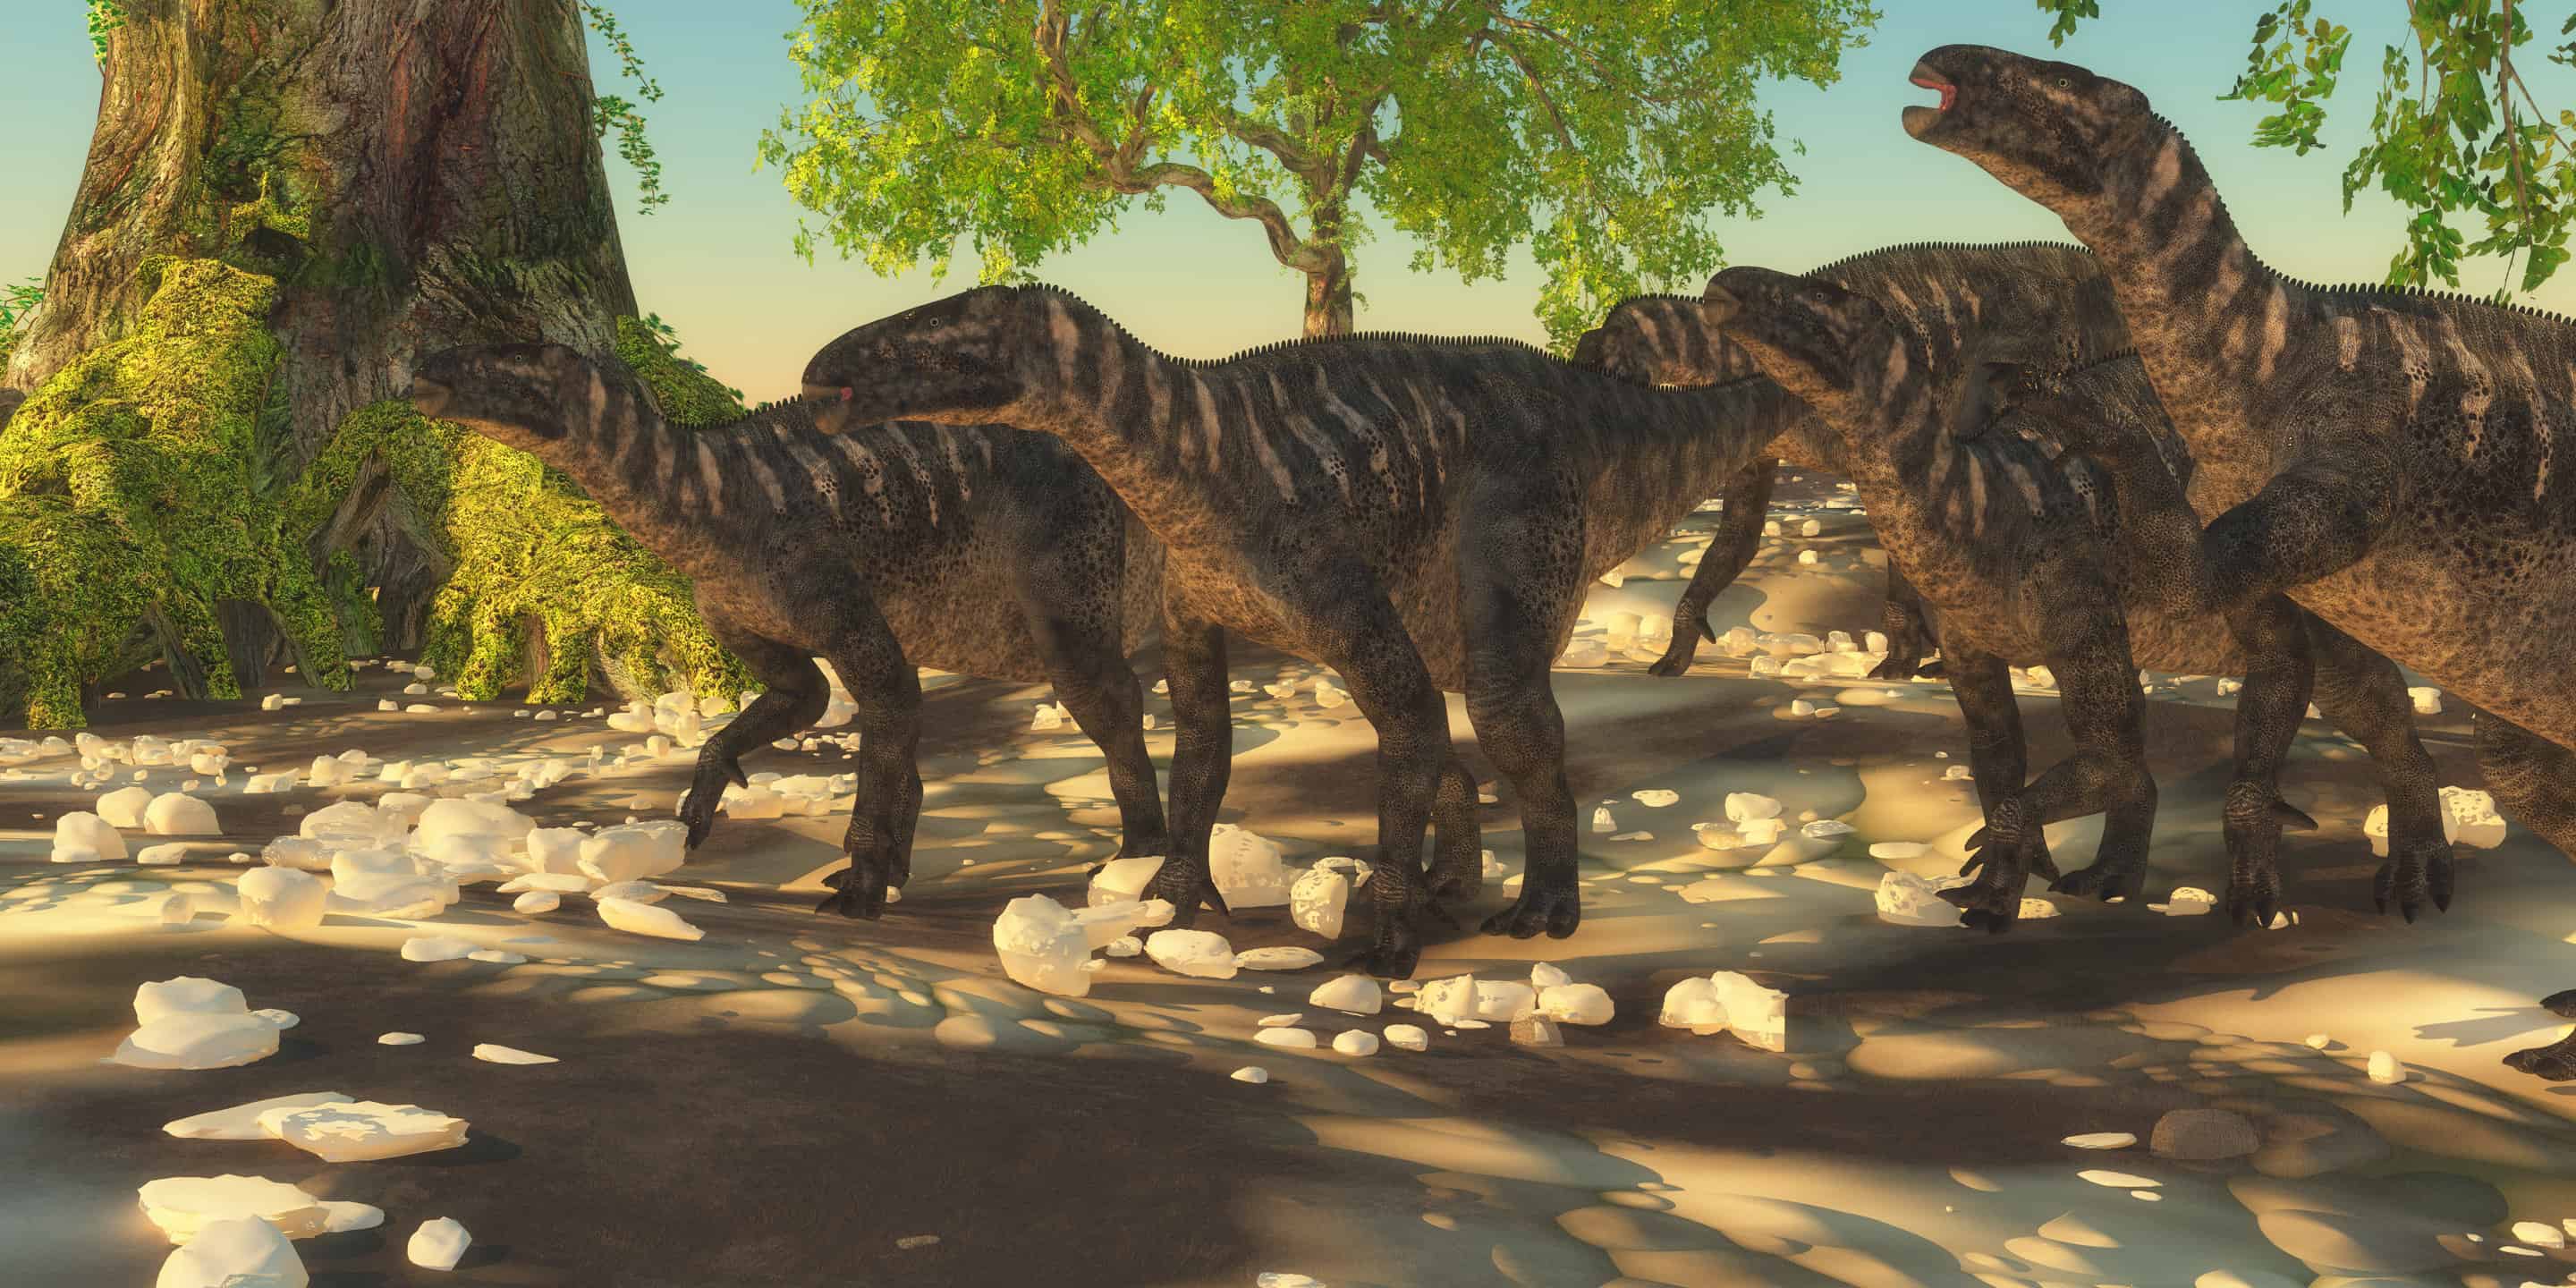 cretaceous period dinosaurs